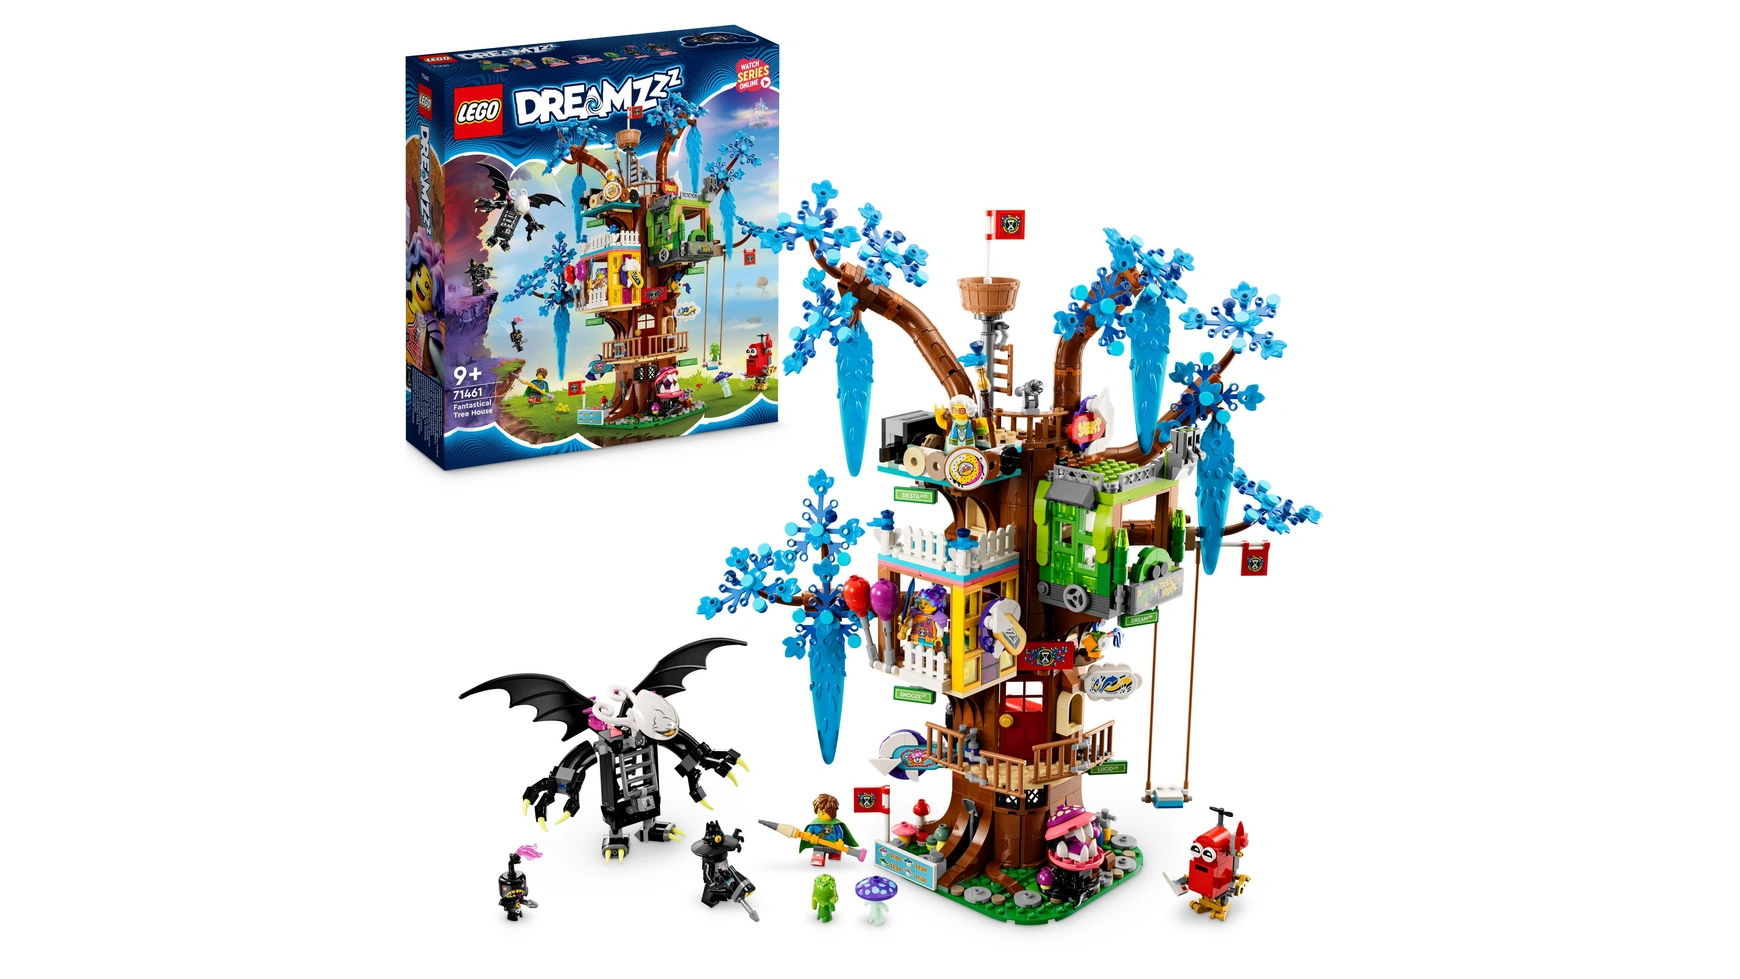 цена Lego DREAMZzz Фантастический домик на дереве, соберите 2 типа модели